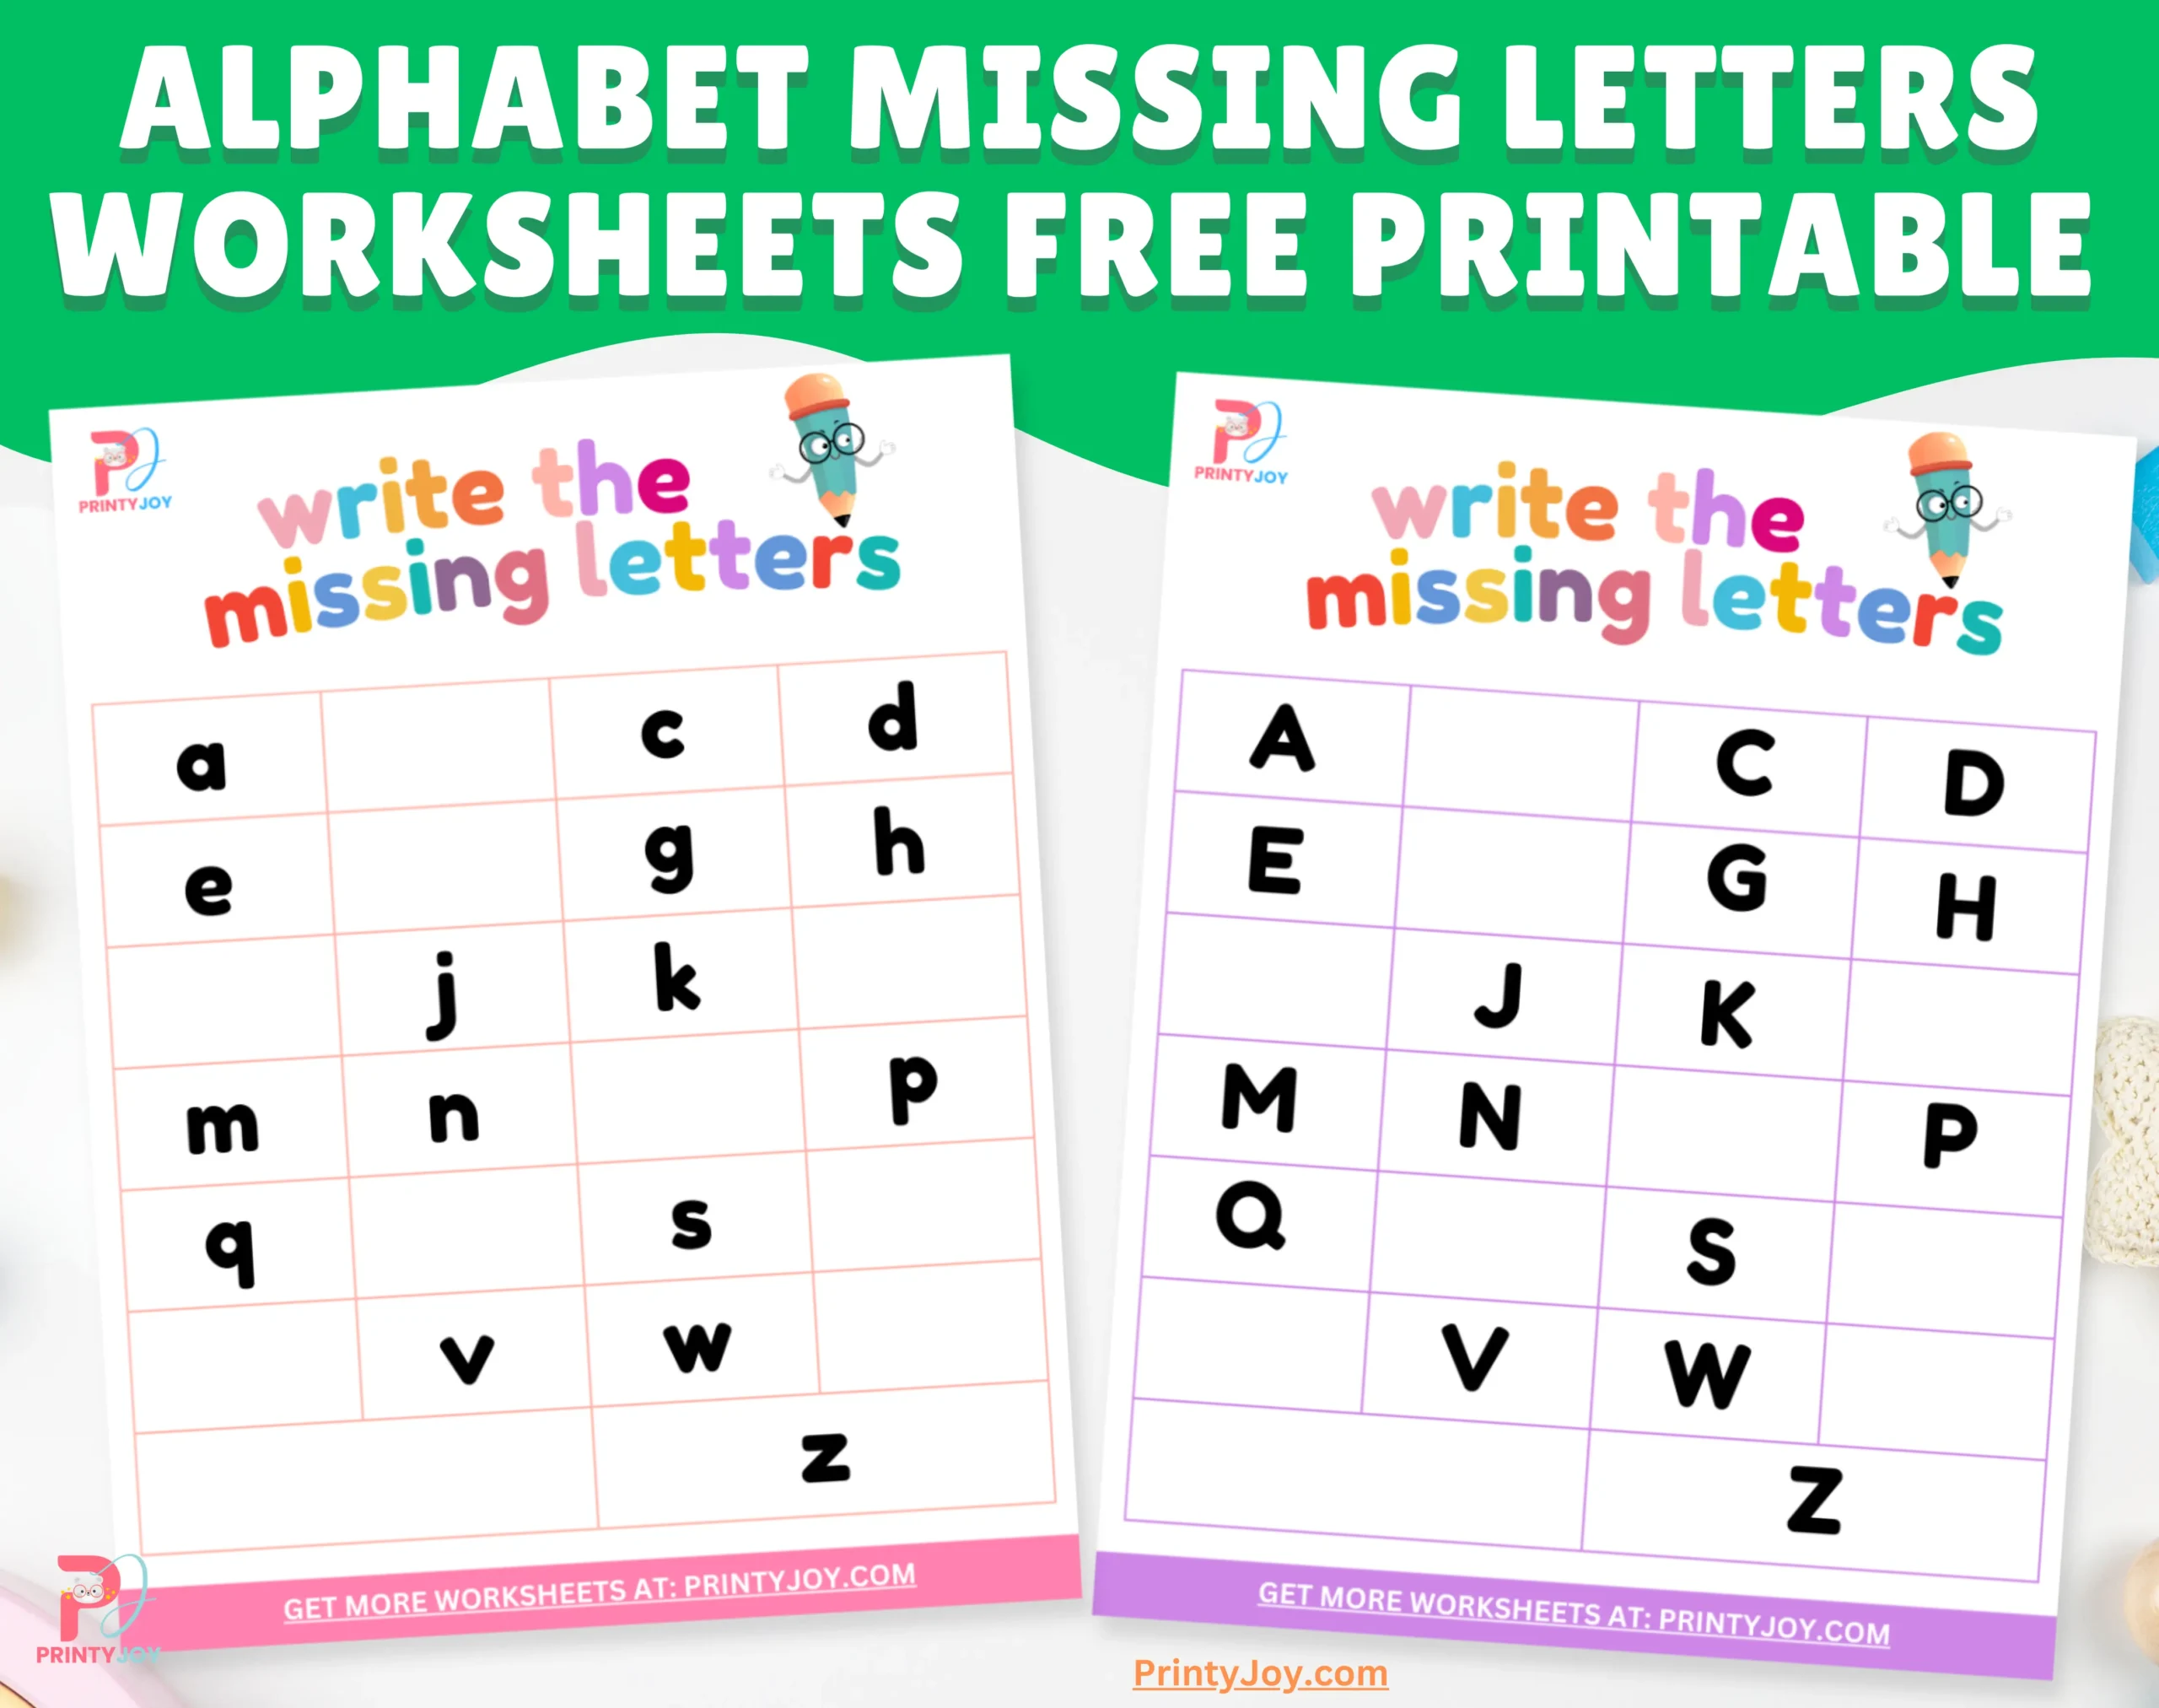 Alphabet Missing Letters Worksheets Free Printable 